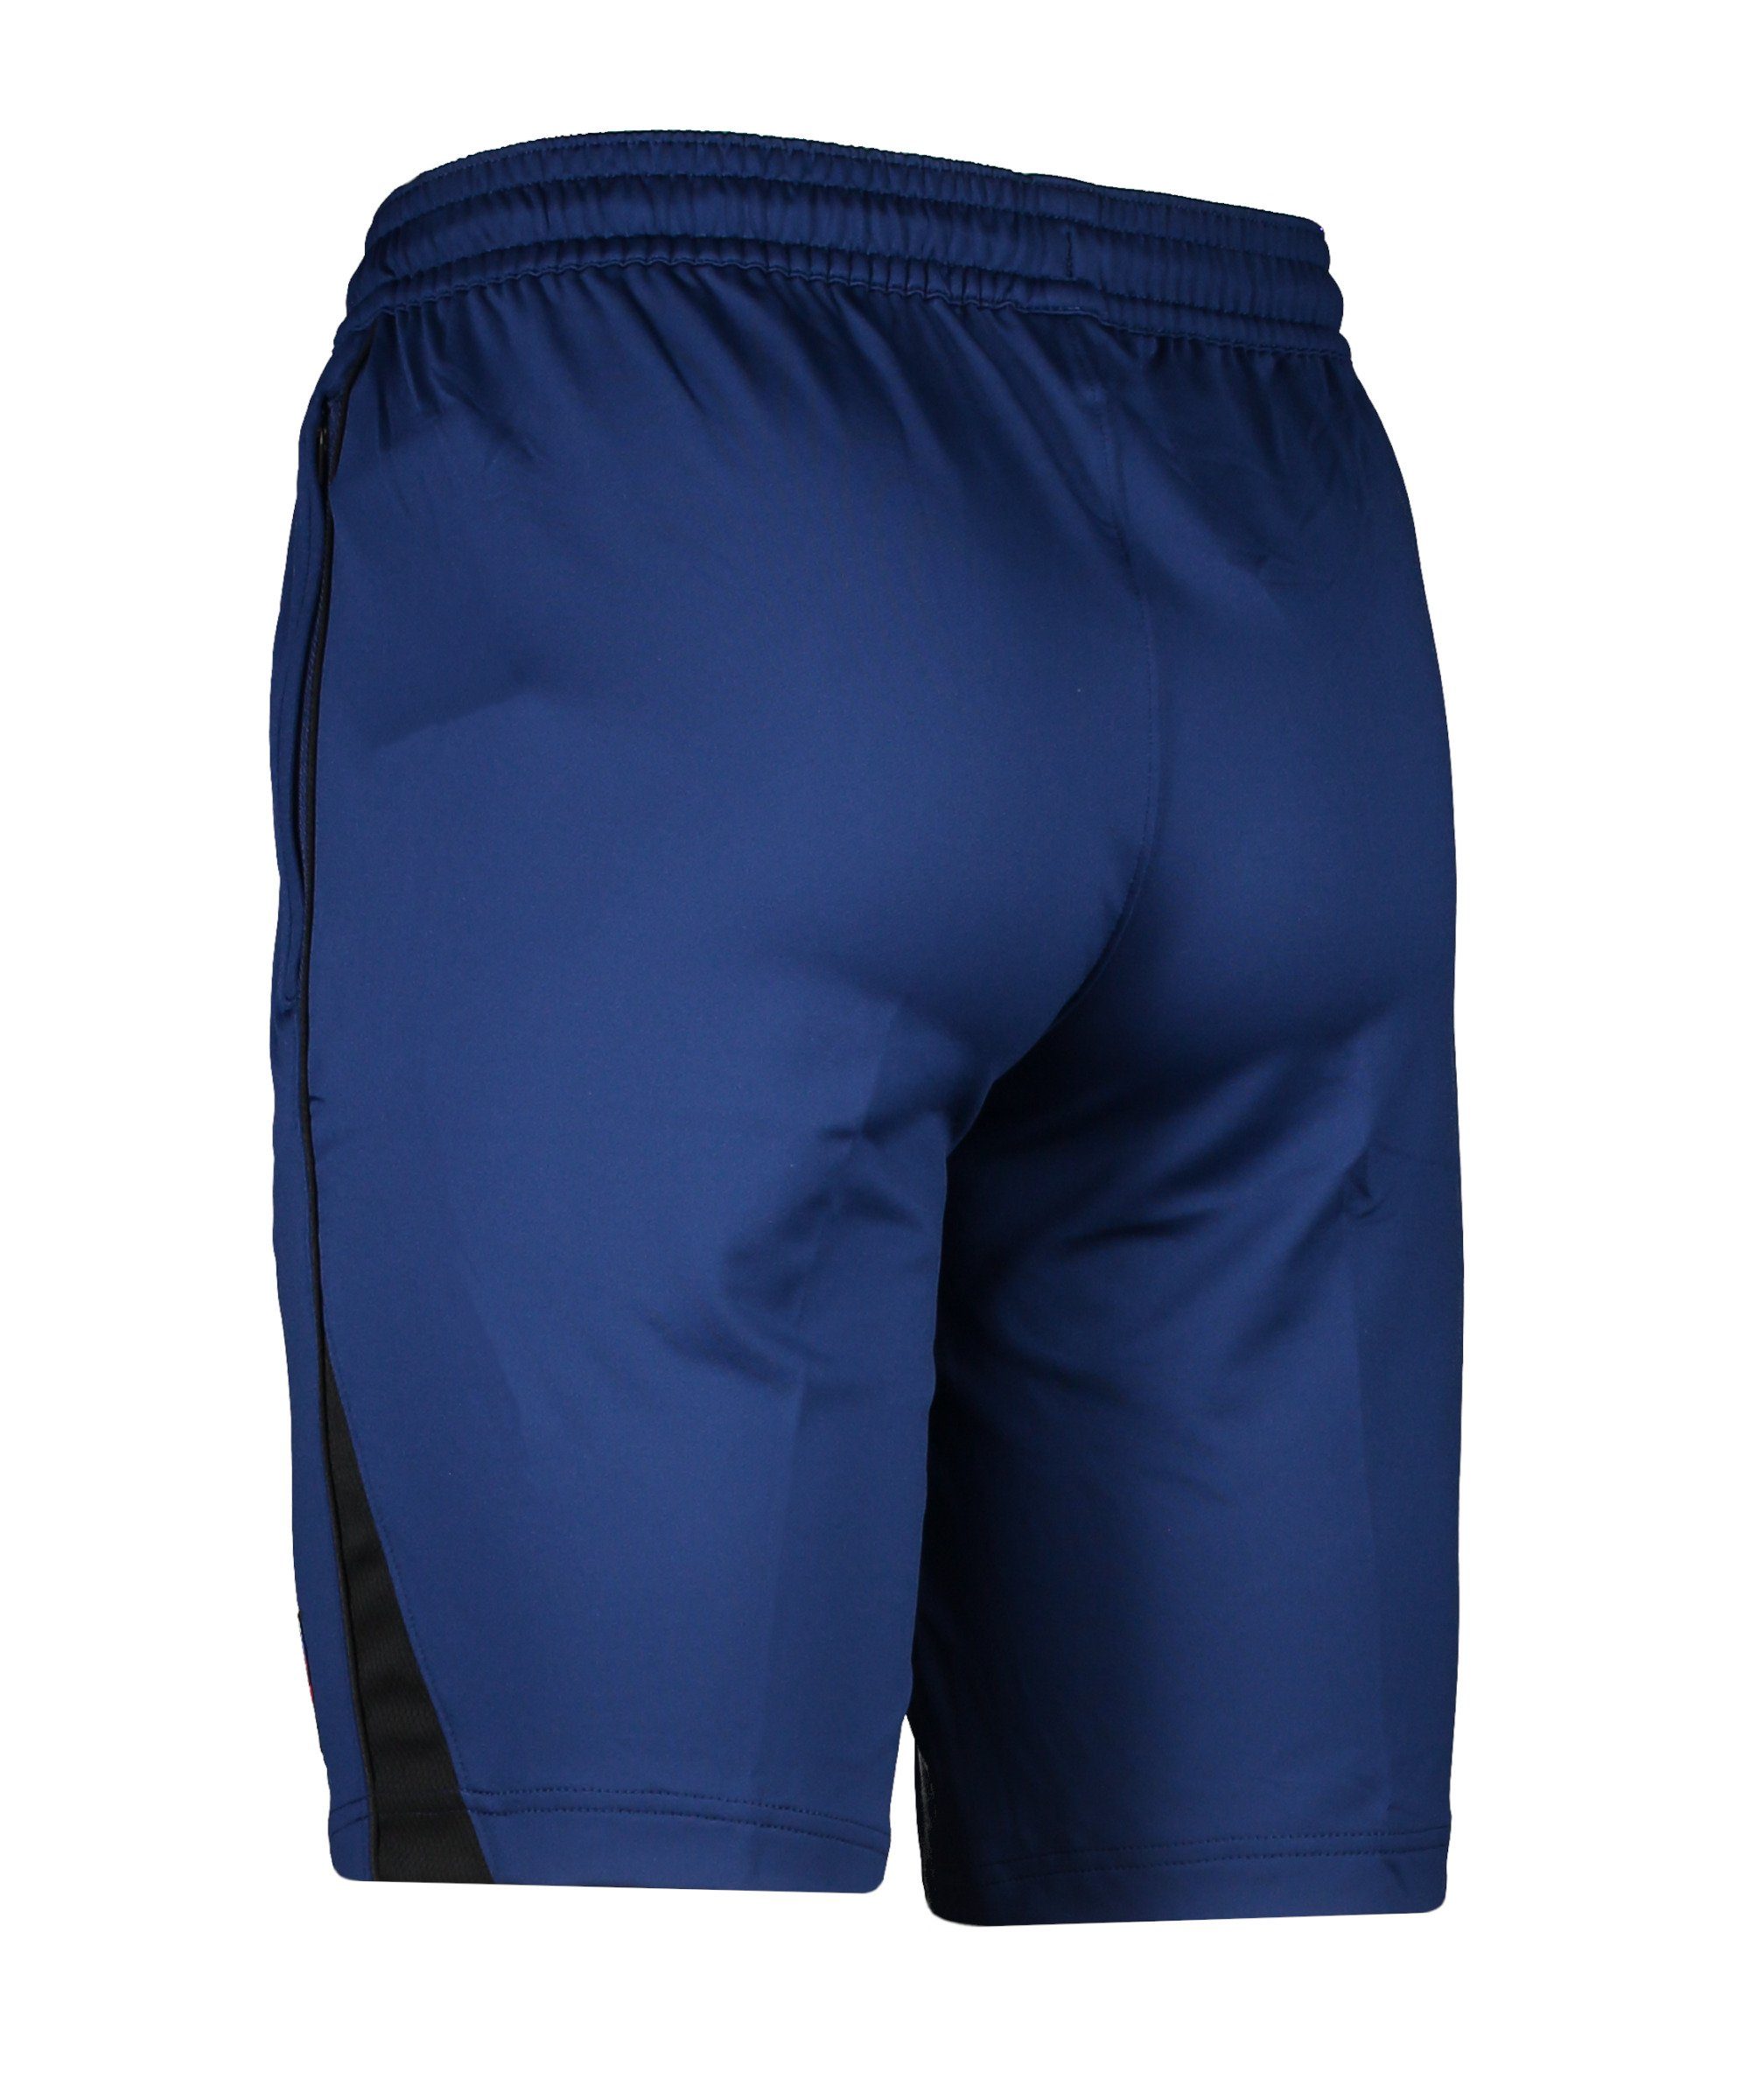 Joga Bonito Short F.C. blauschwarzweiss Jogginghose Sportswear Nike